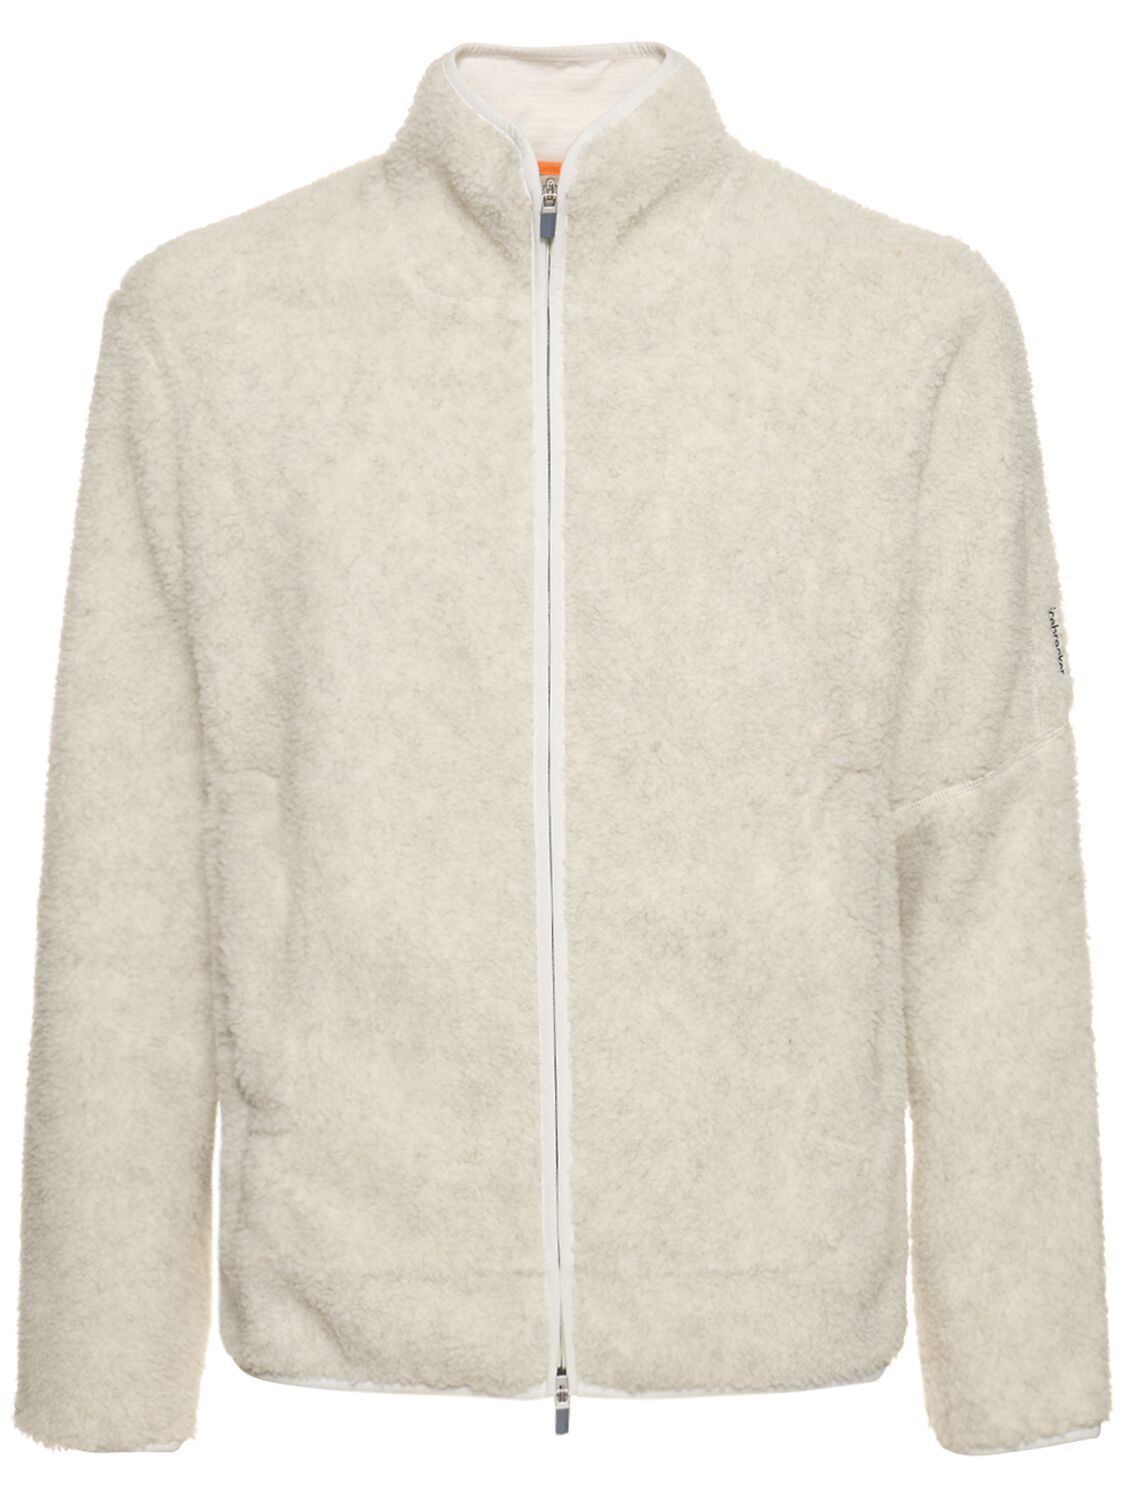 Realfleece Wool Blend Zip Sweatshirt – MEN > CLOTHING > SWEATSHIRTS